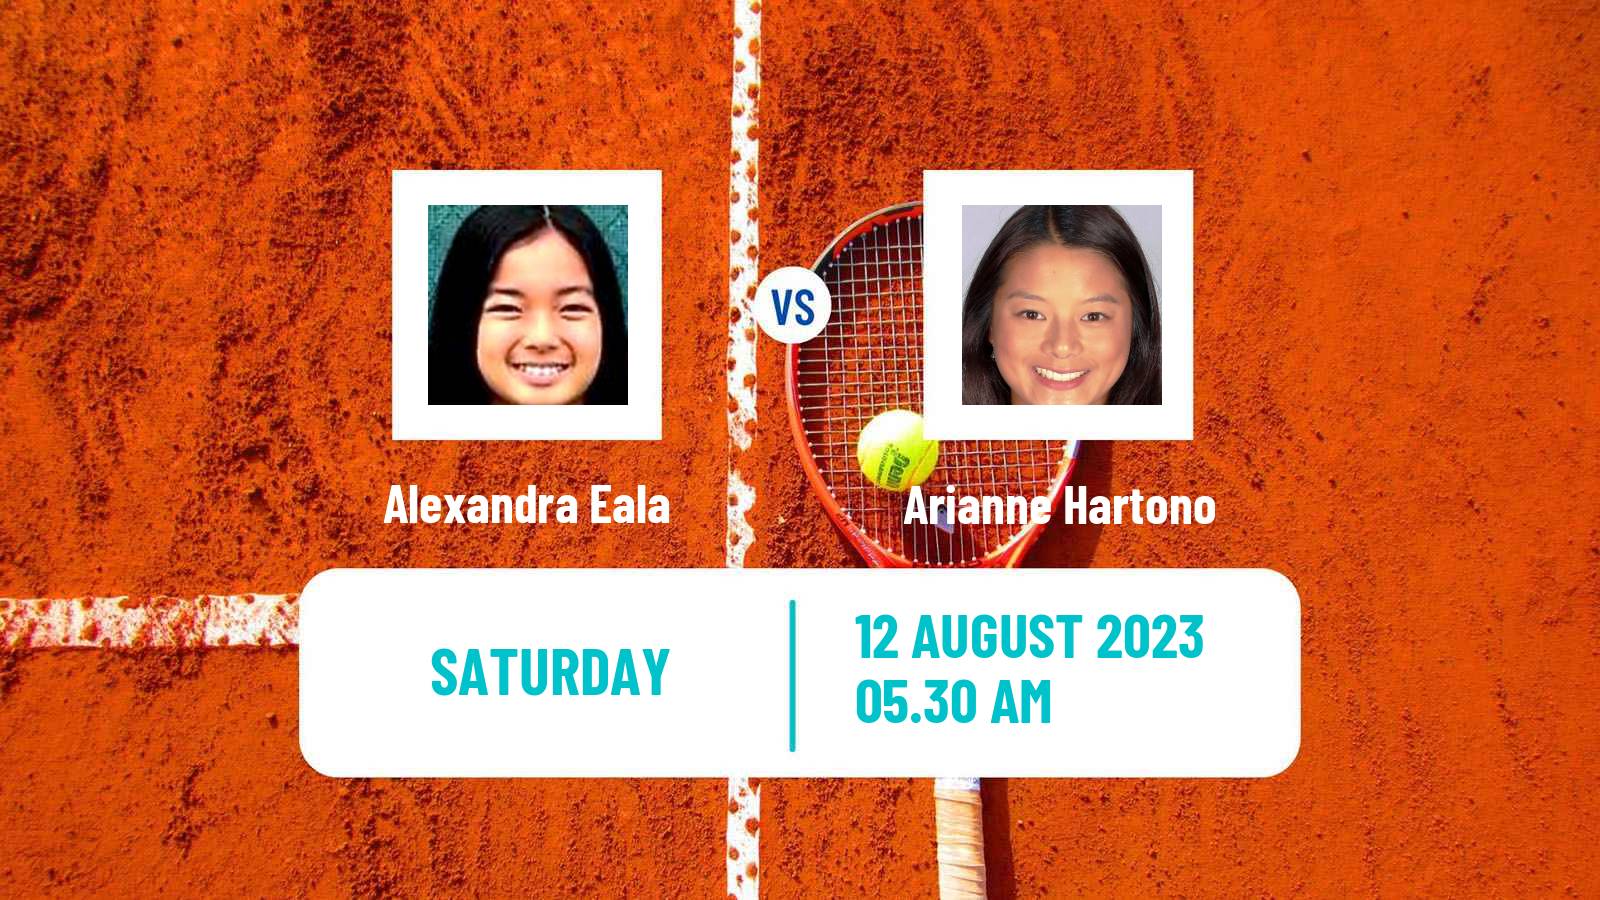 Tennis ITF W25 Roehampton 2 Women Alexandra Eala - Arianne Hartono